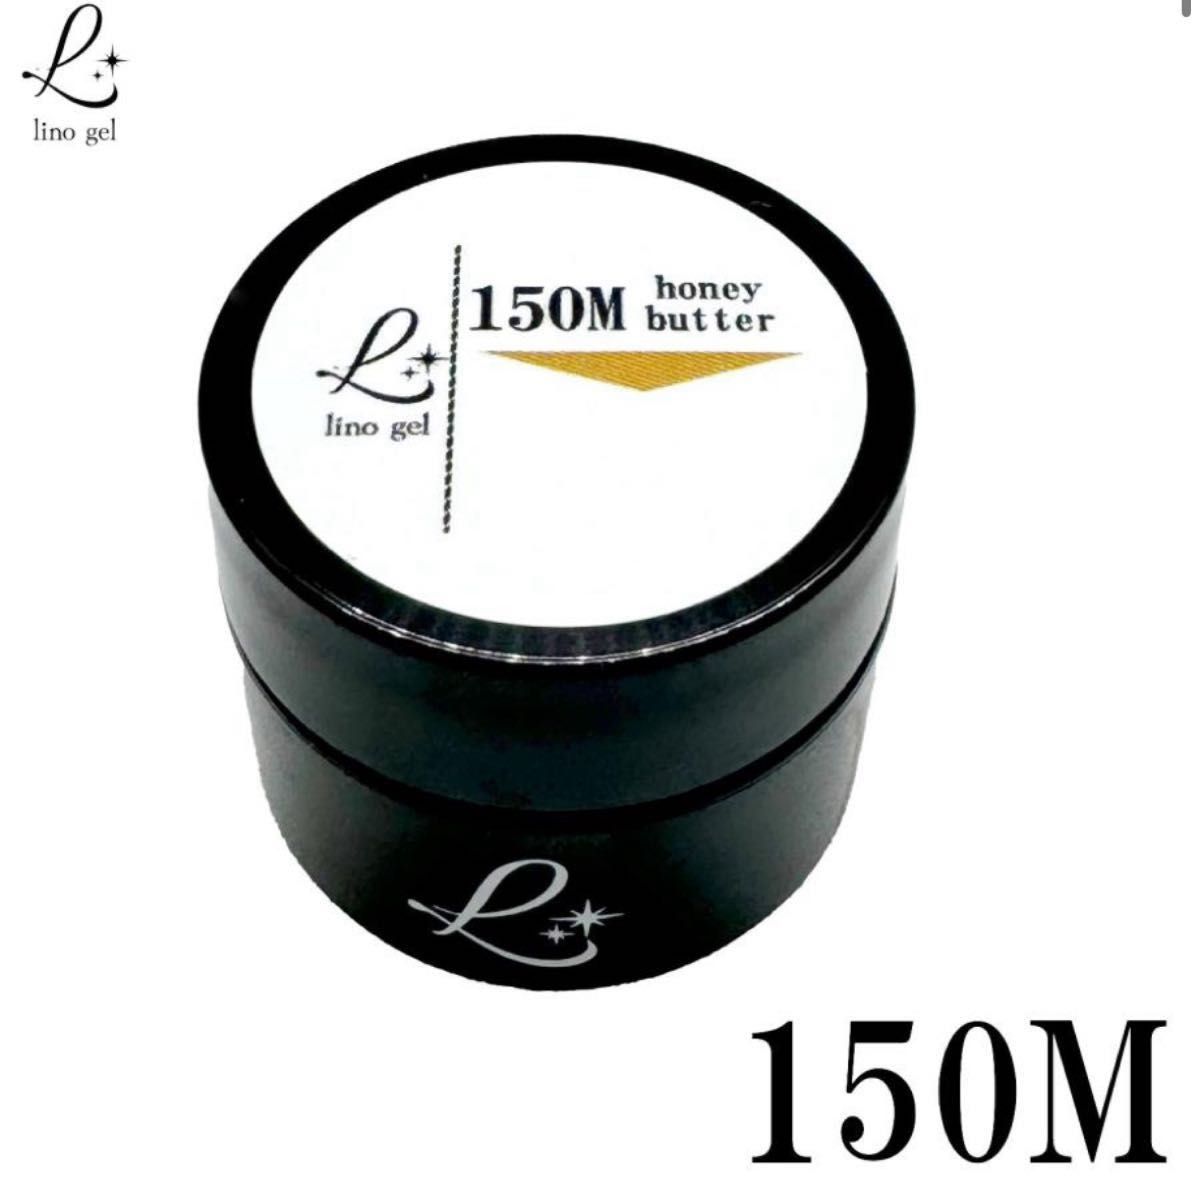 LinoGel リノジェル カラージェル 5g LED/UVライト対応 150M ハニーバター honey butter 